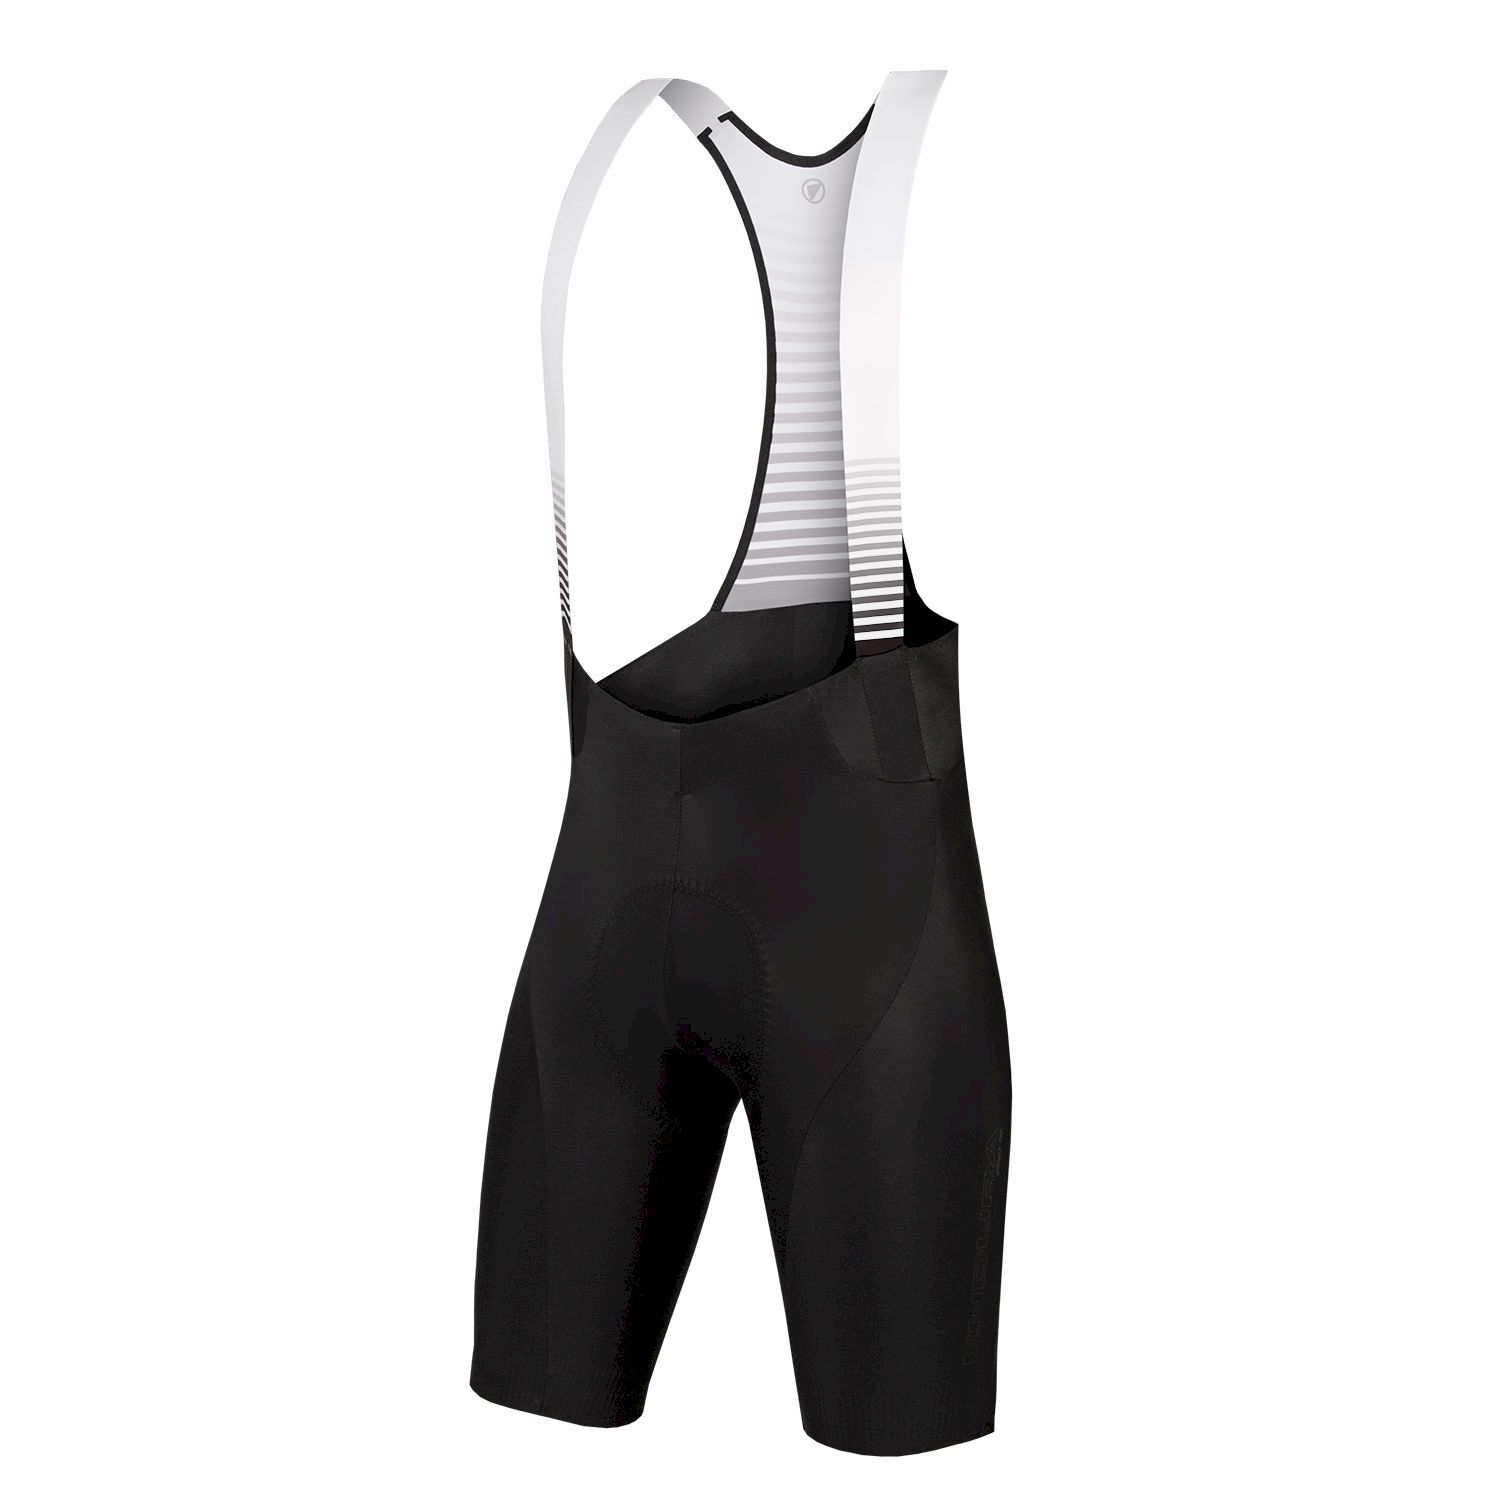 Endura Pro SL Bibshort Narrow Pad - Cycling shorts - Men's